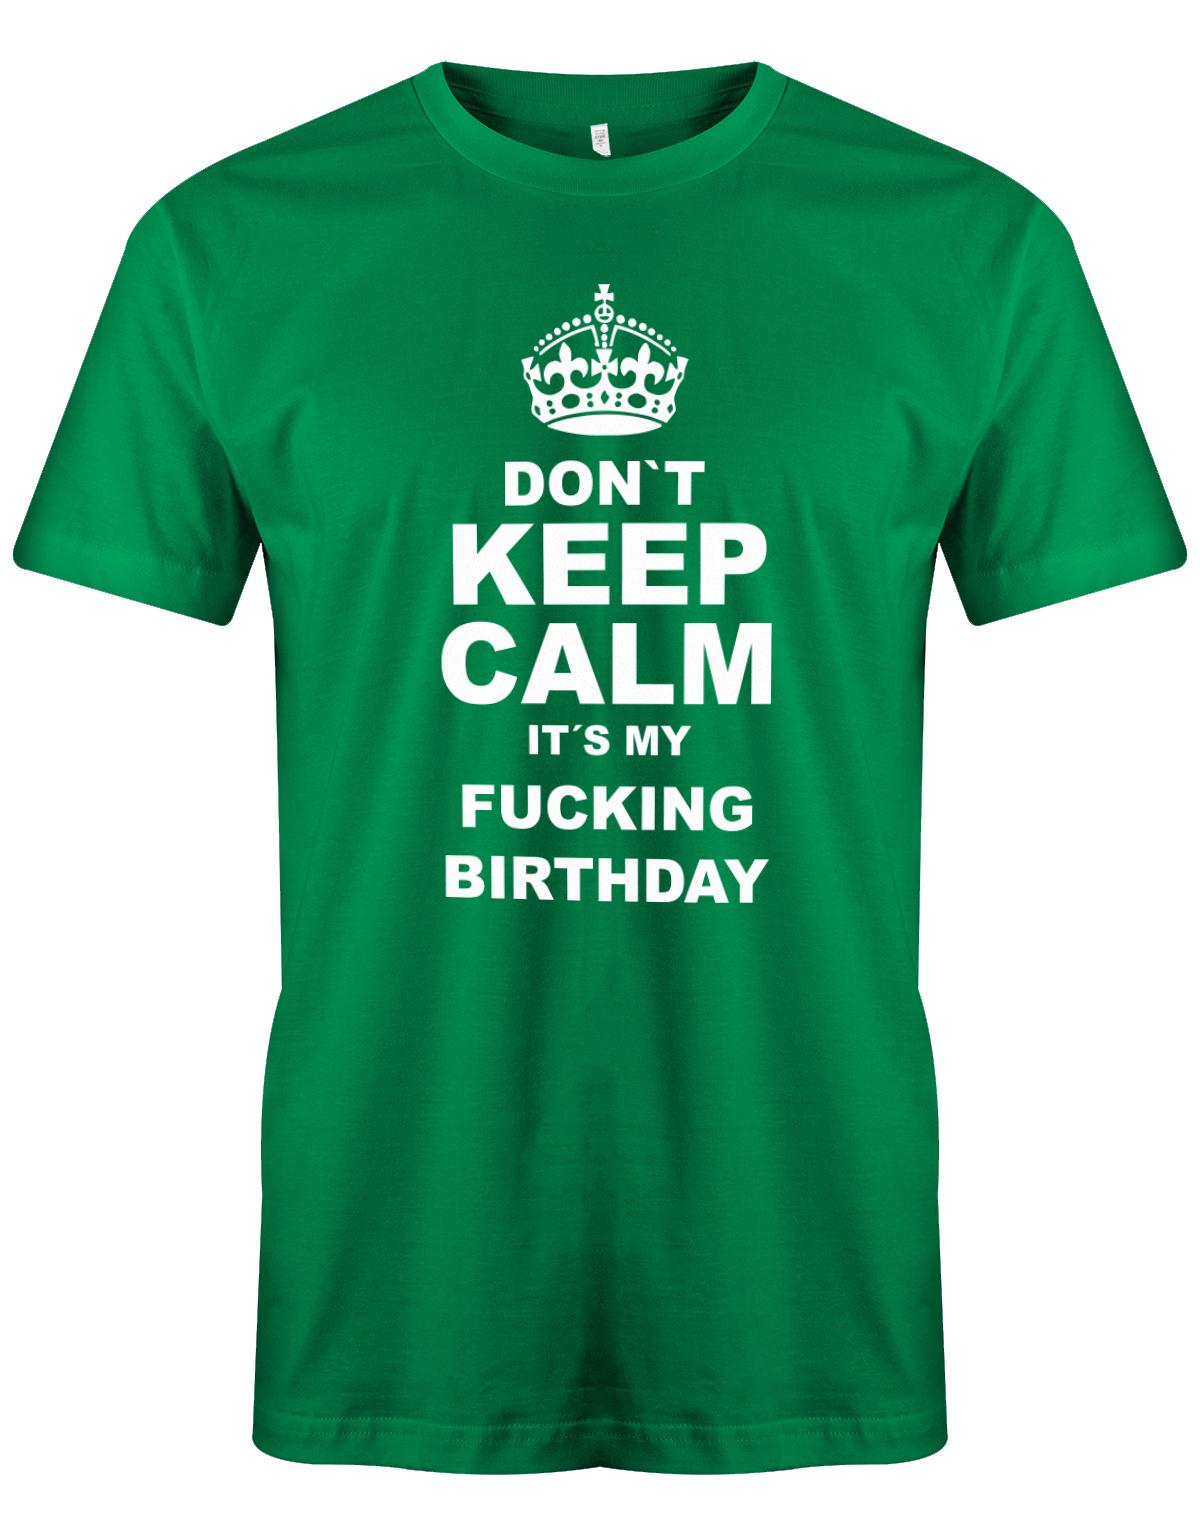 Dont-Keep-calm-is-my-fucking-Birthday-Herren-Shirt-Gr-n